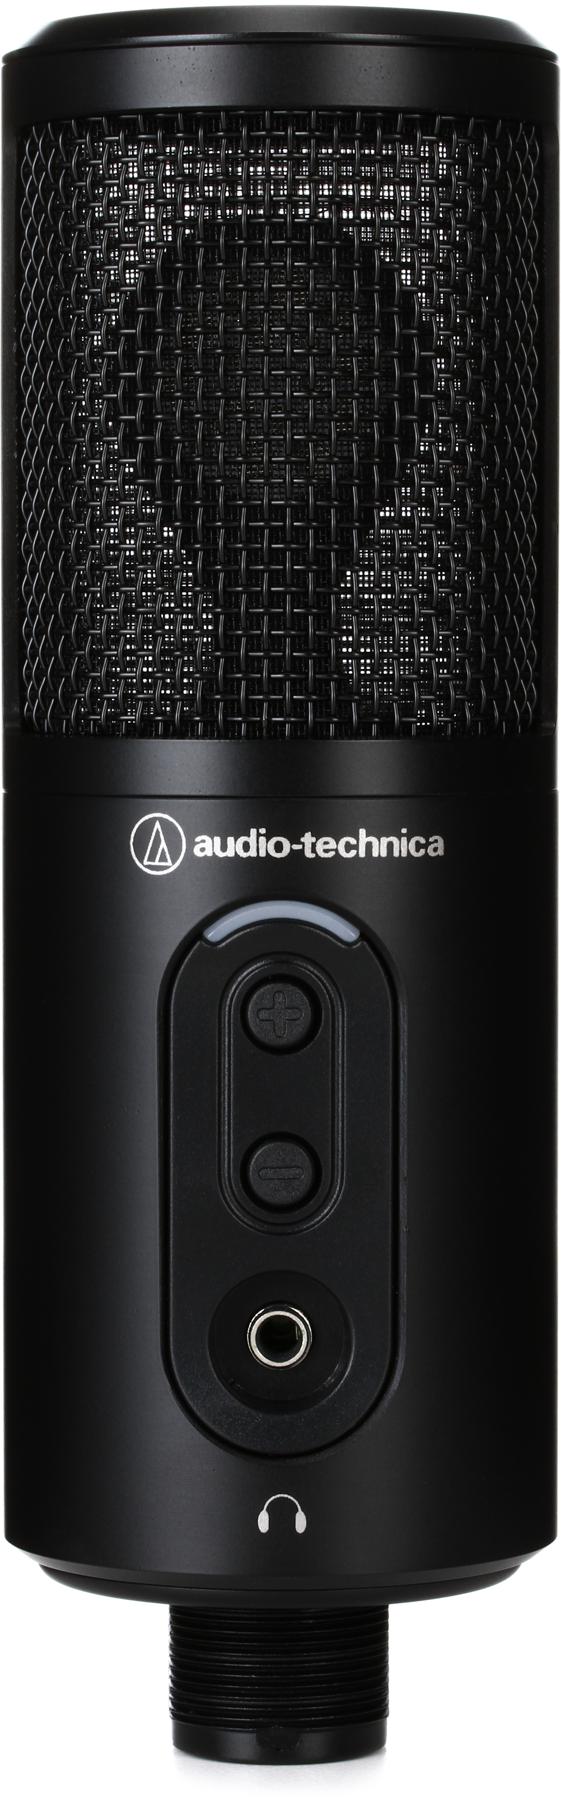 5. Audio-Technica ATR2500x